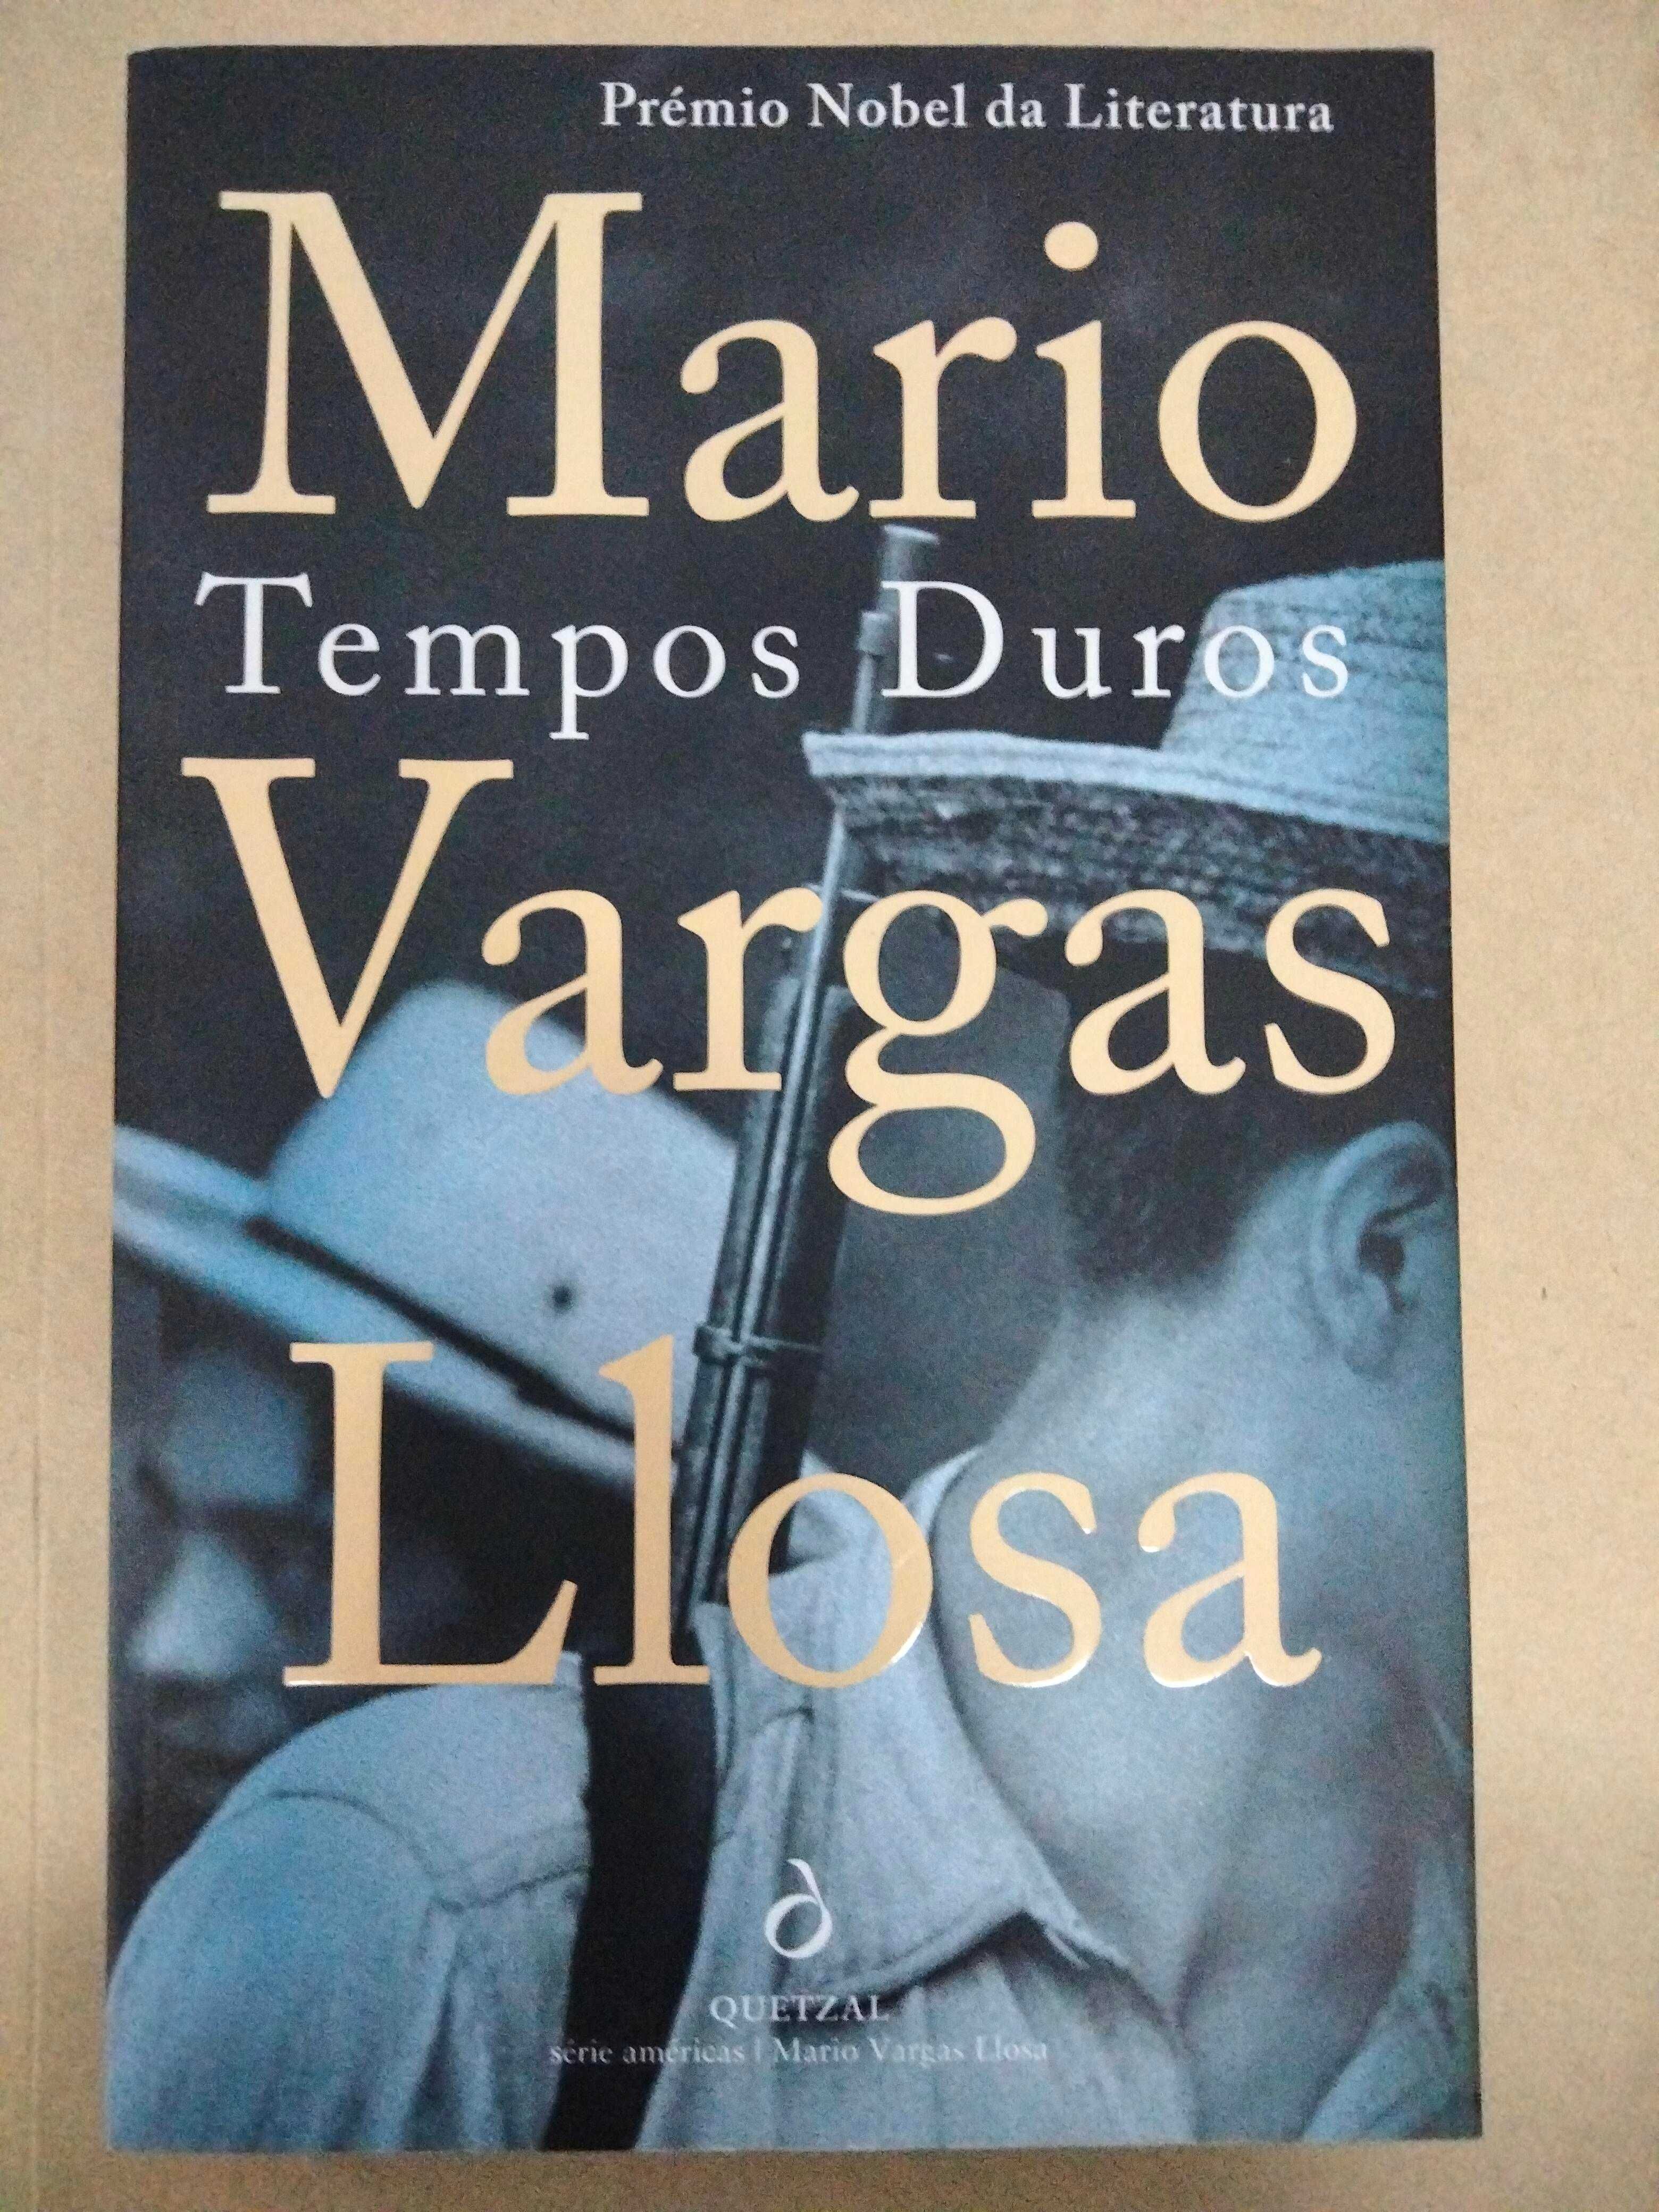 Livro Tempos Duros de Mário Vargas Llosa